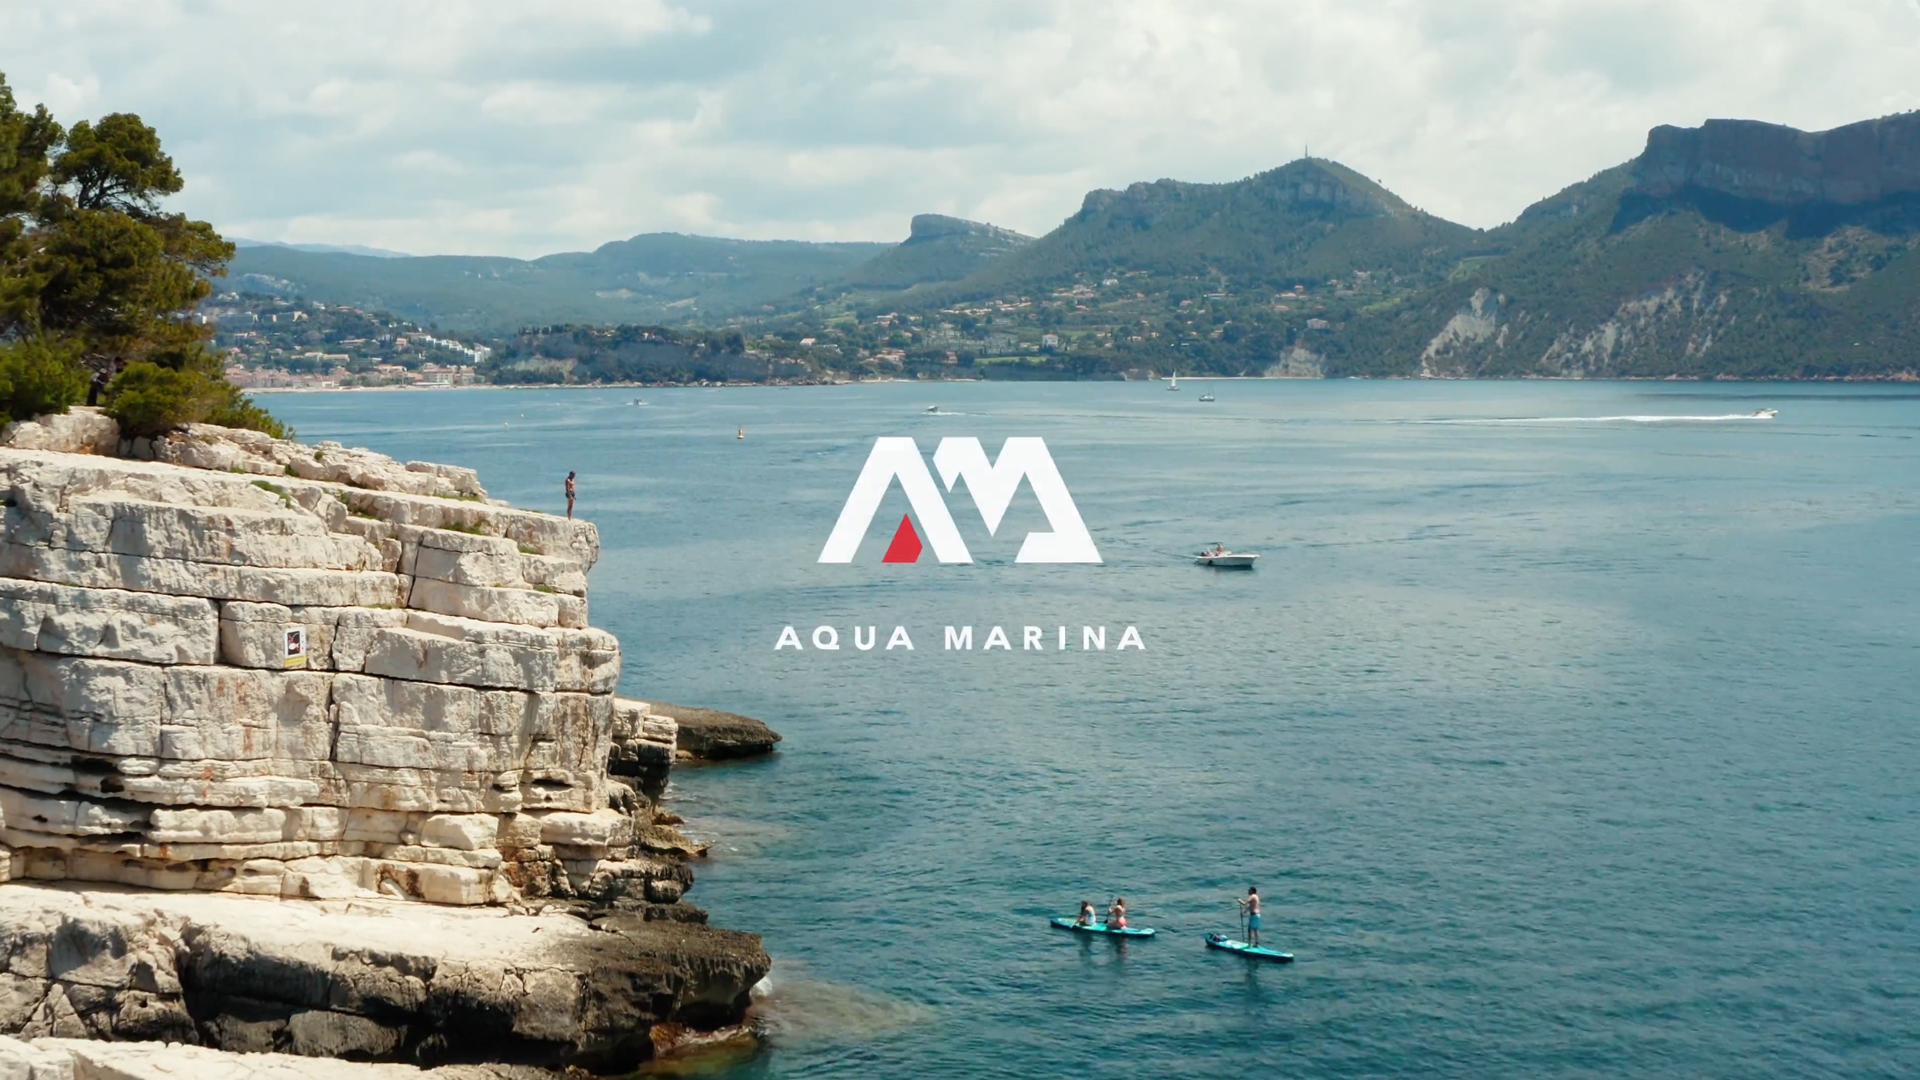 Aqua Marina – Wonder is All-Around